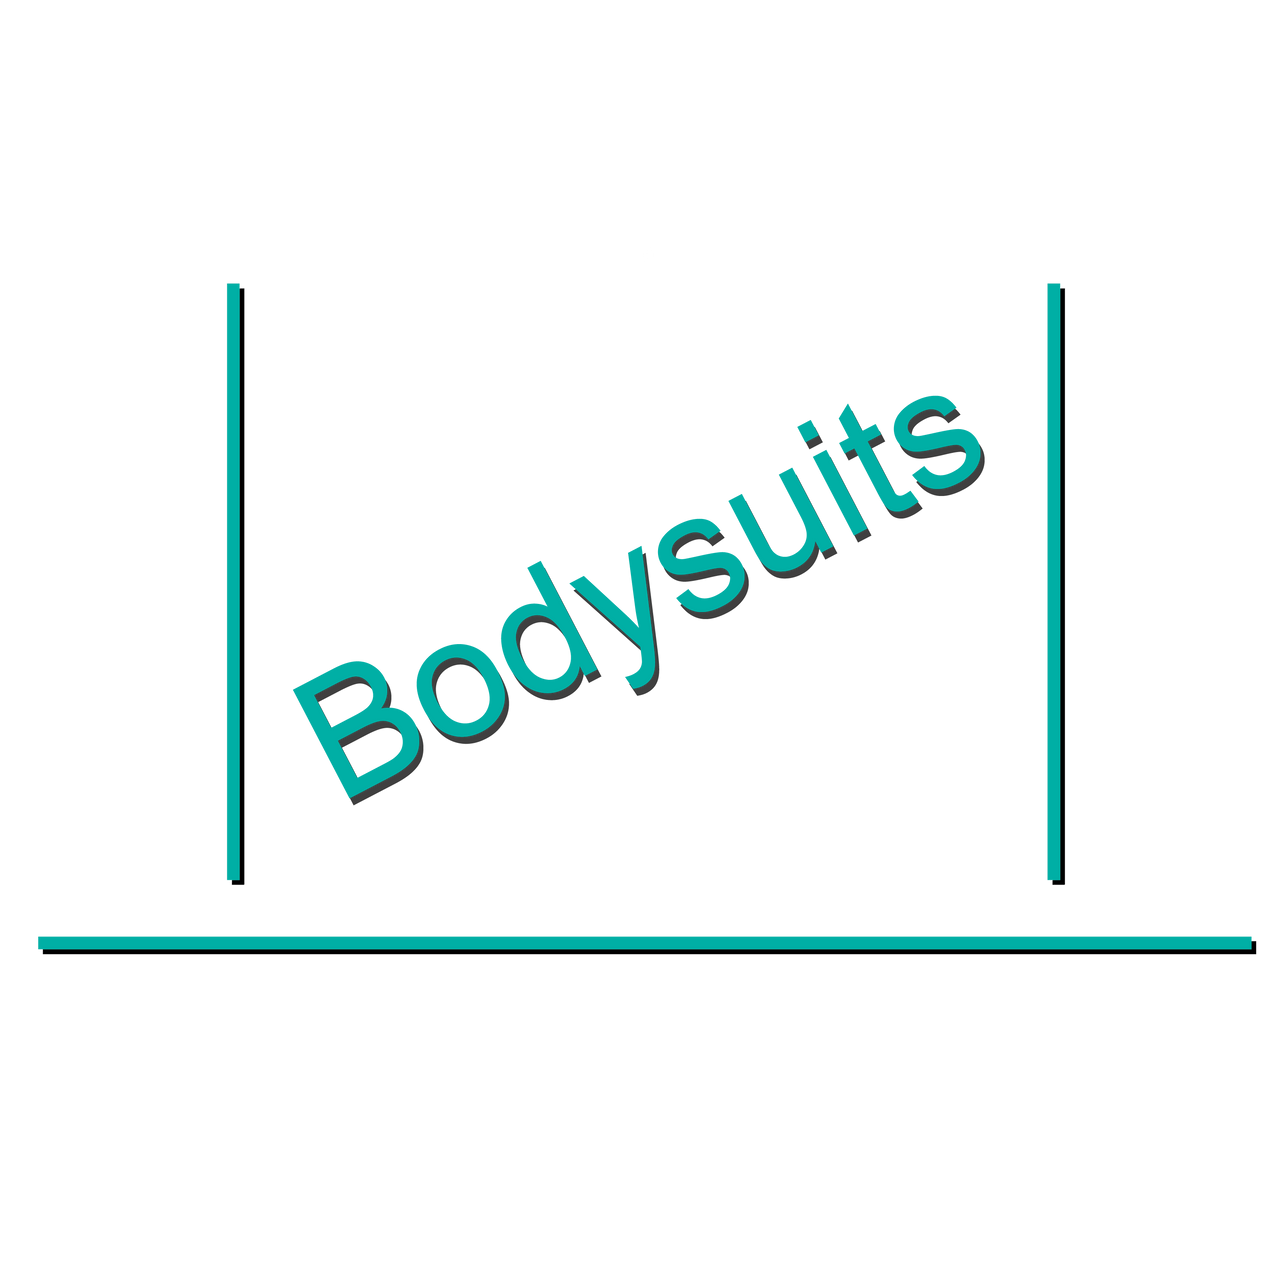 Bodysuits